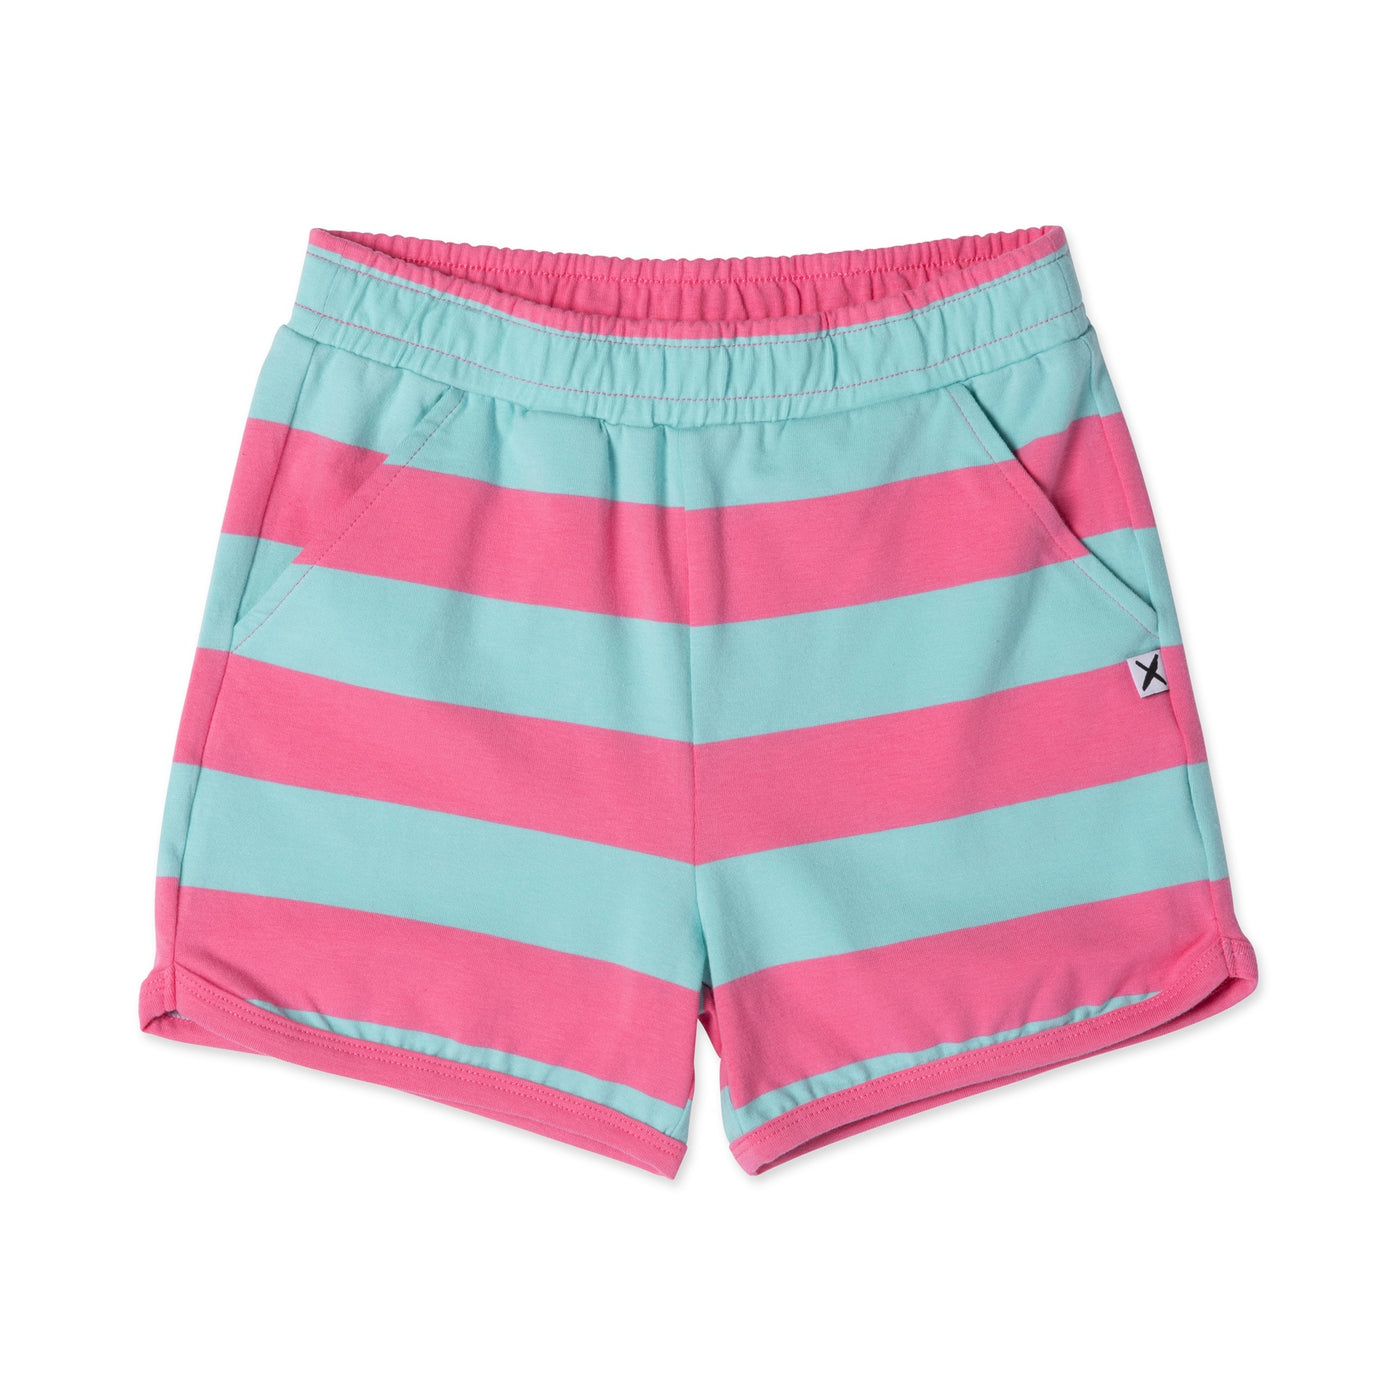 Girls Striped Sport Short - Pink/Teal Stripe